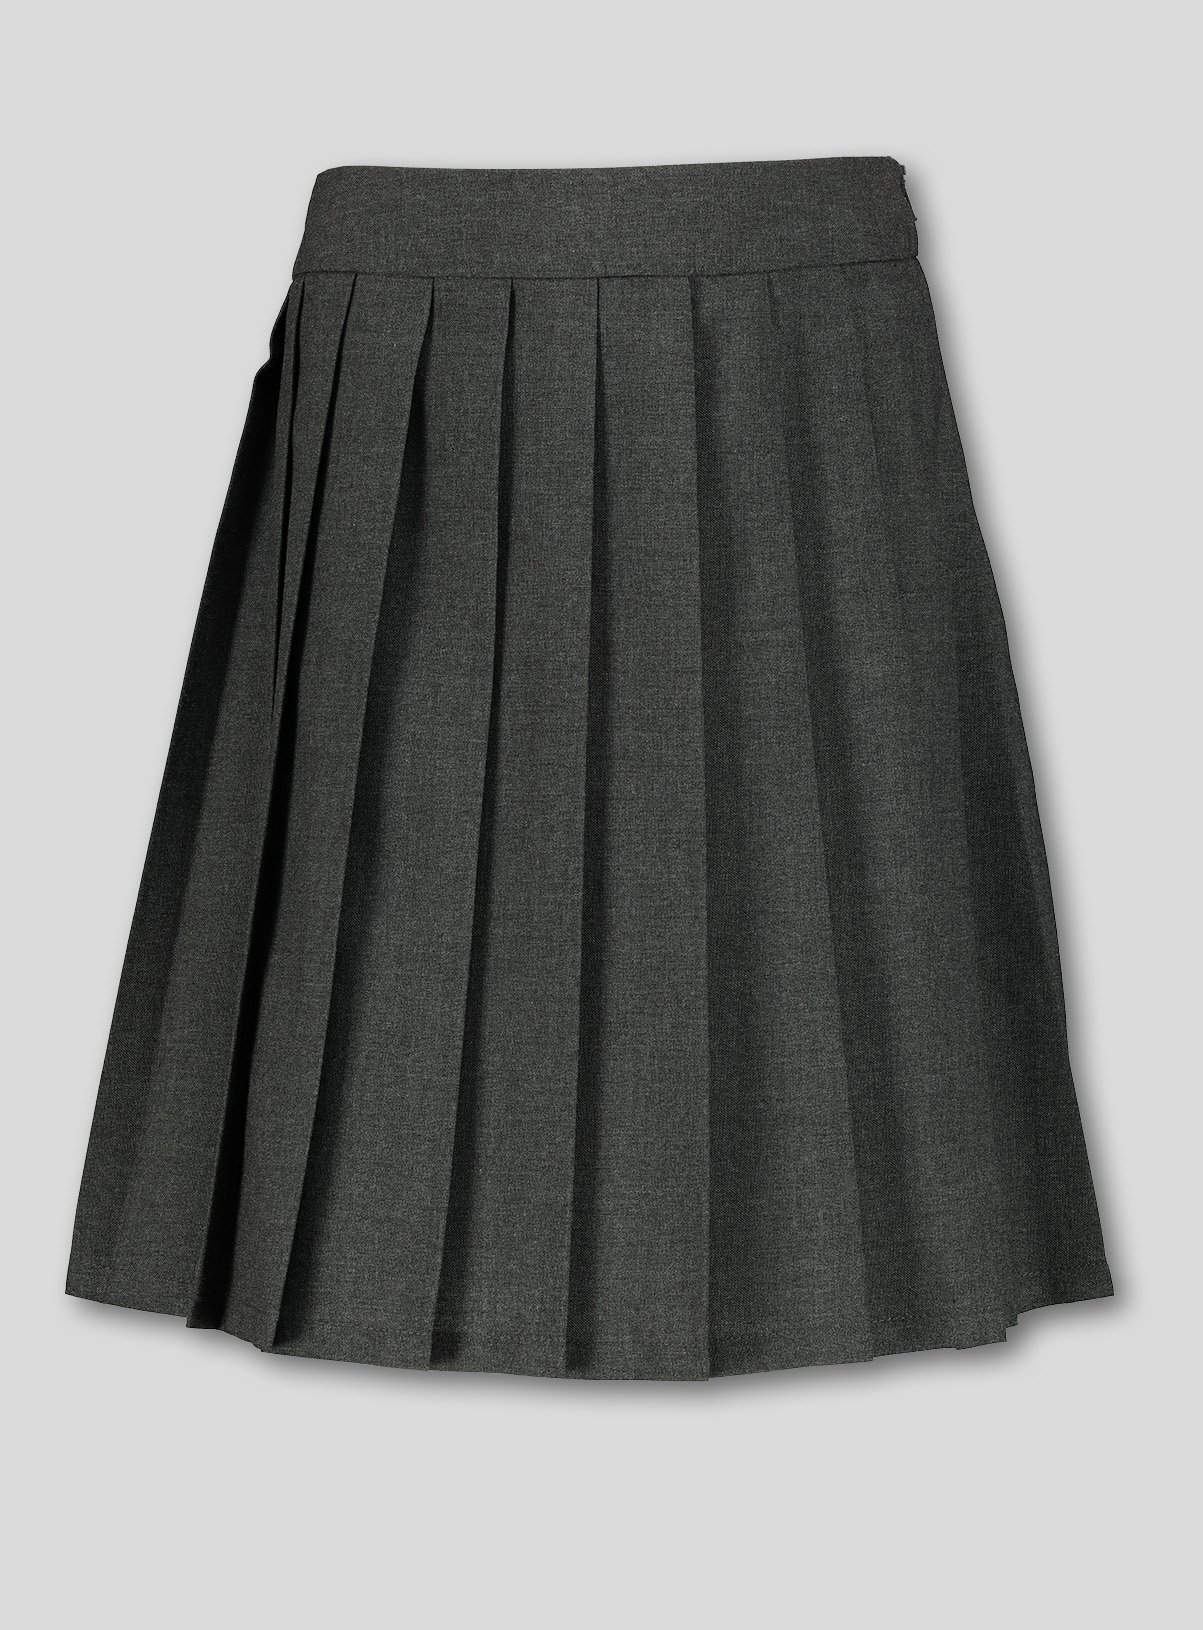 sainsbury's black school skirts